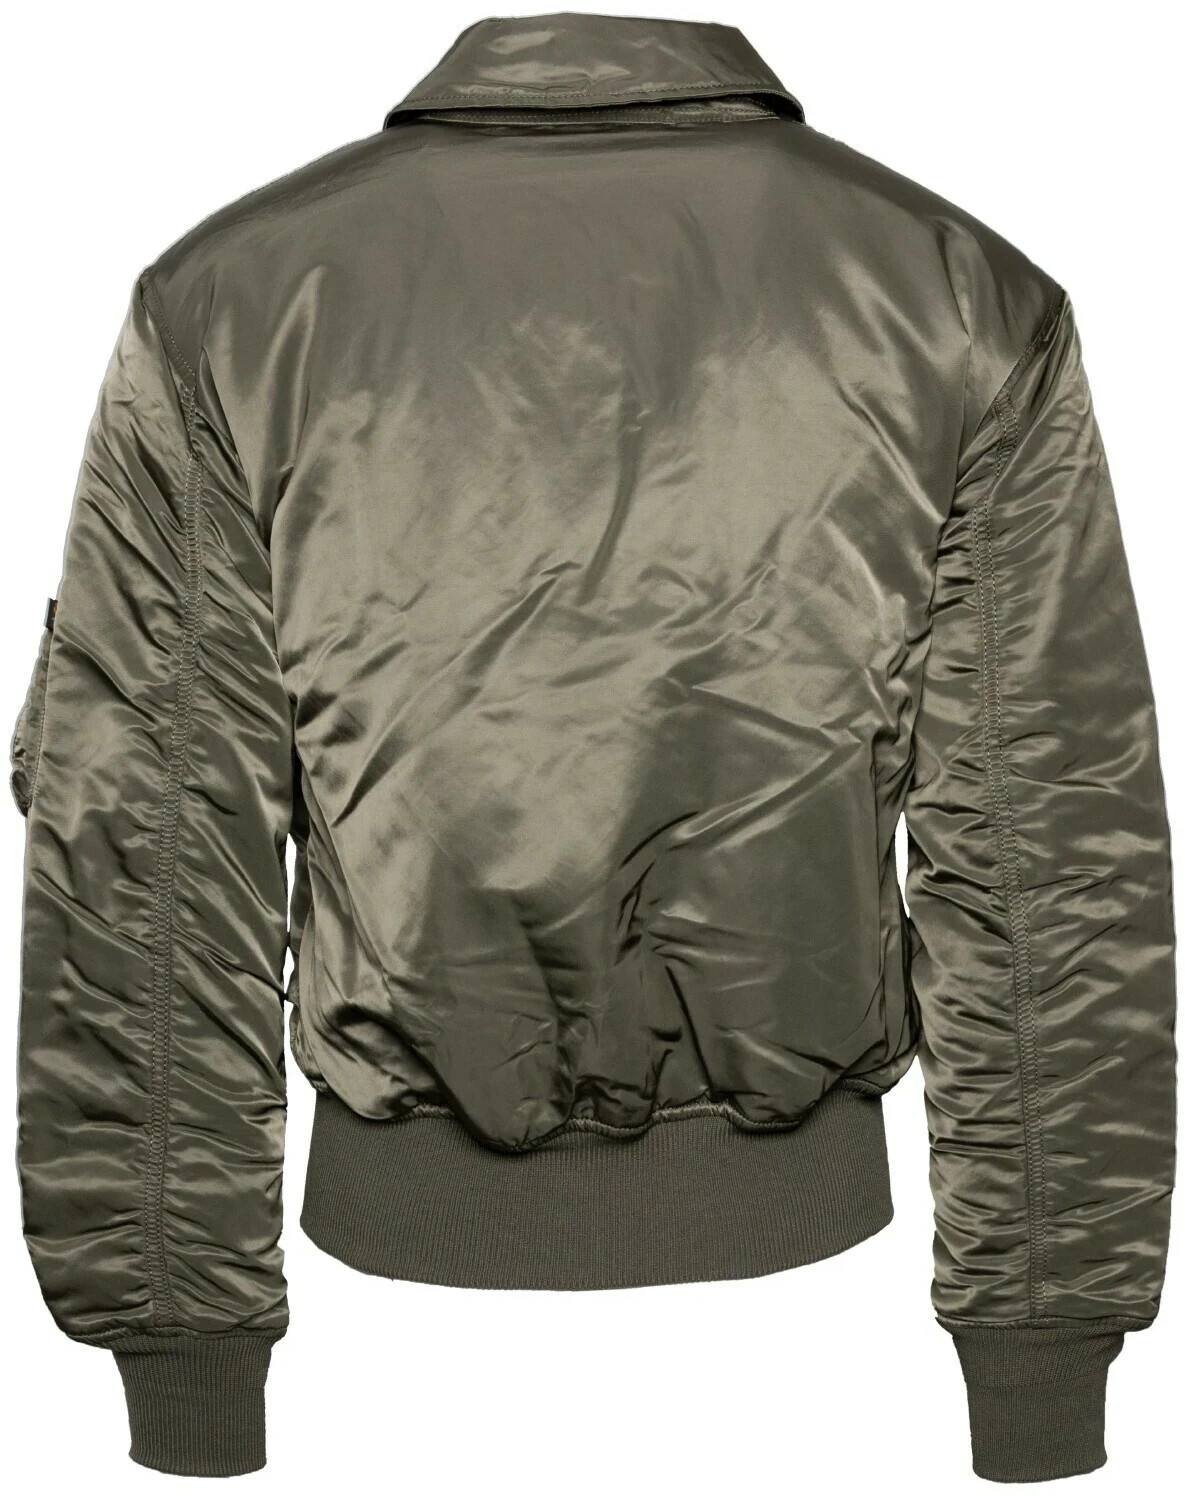 Aviator jacket, 100102, CWU 45, 01, Alpha Industries